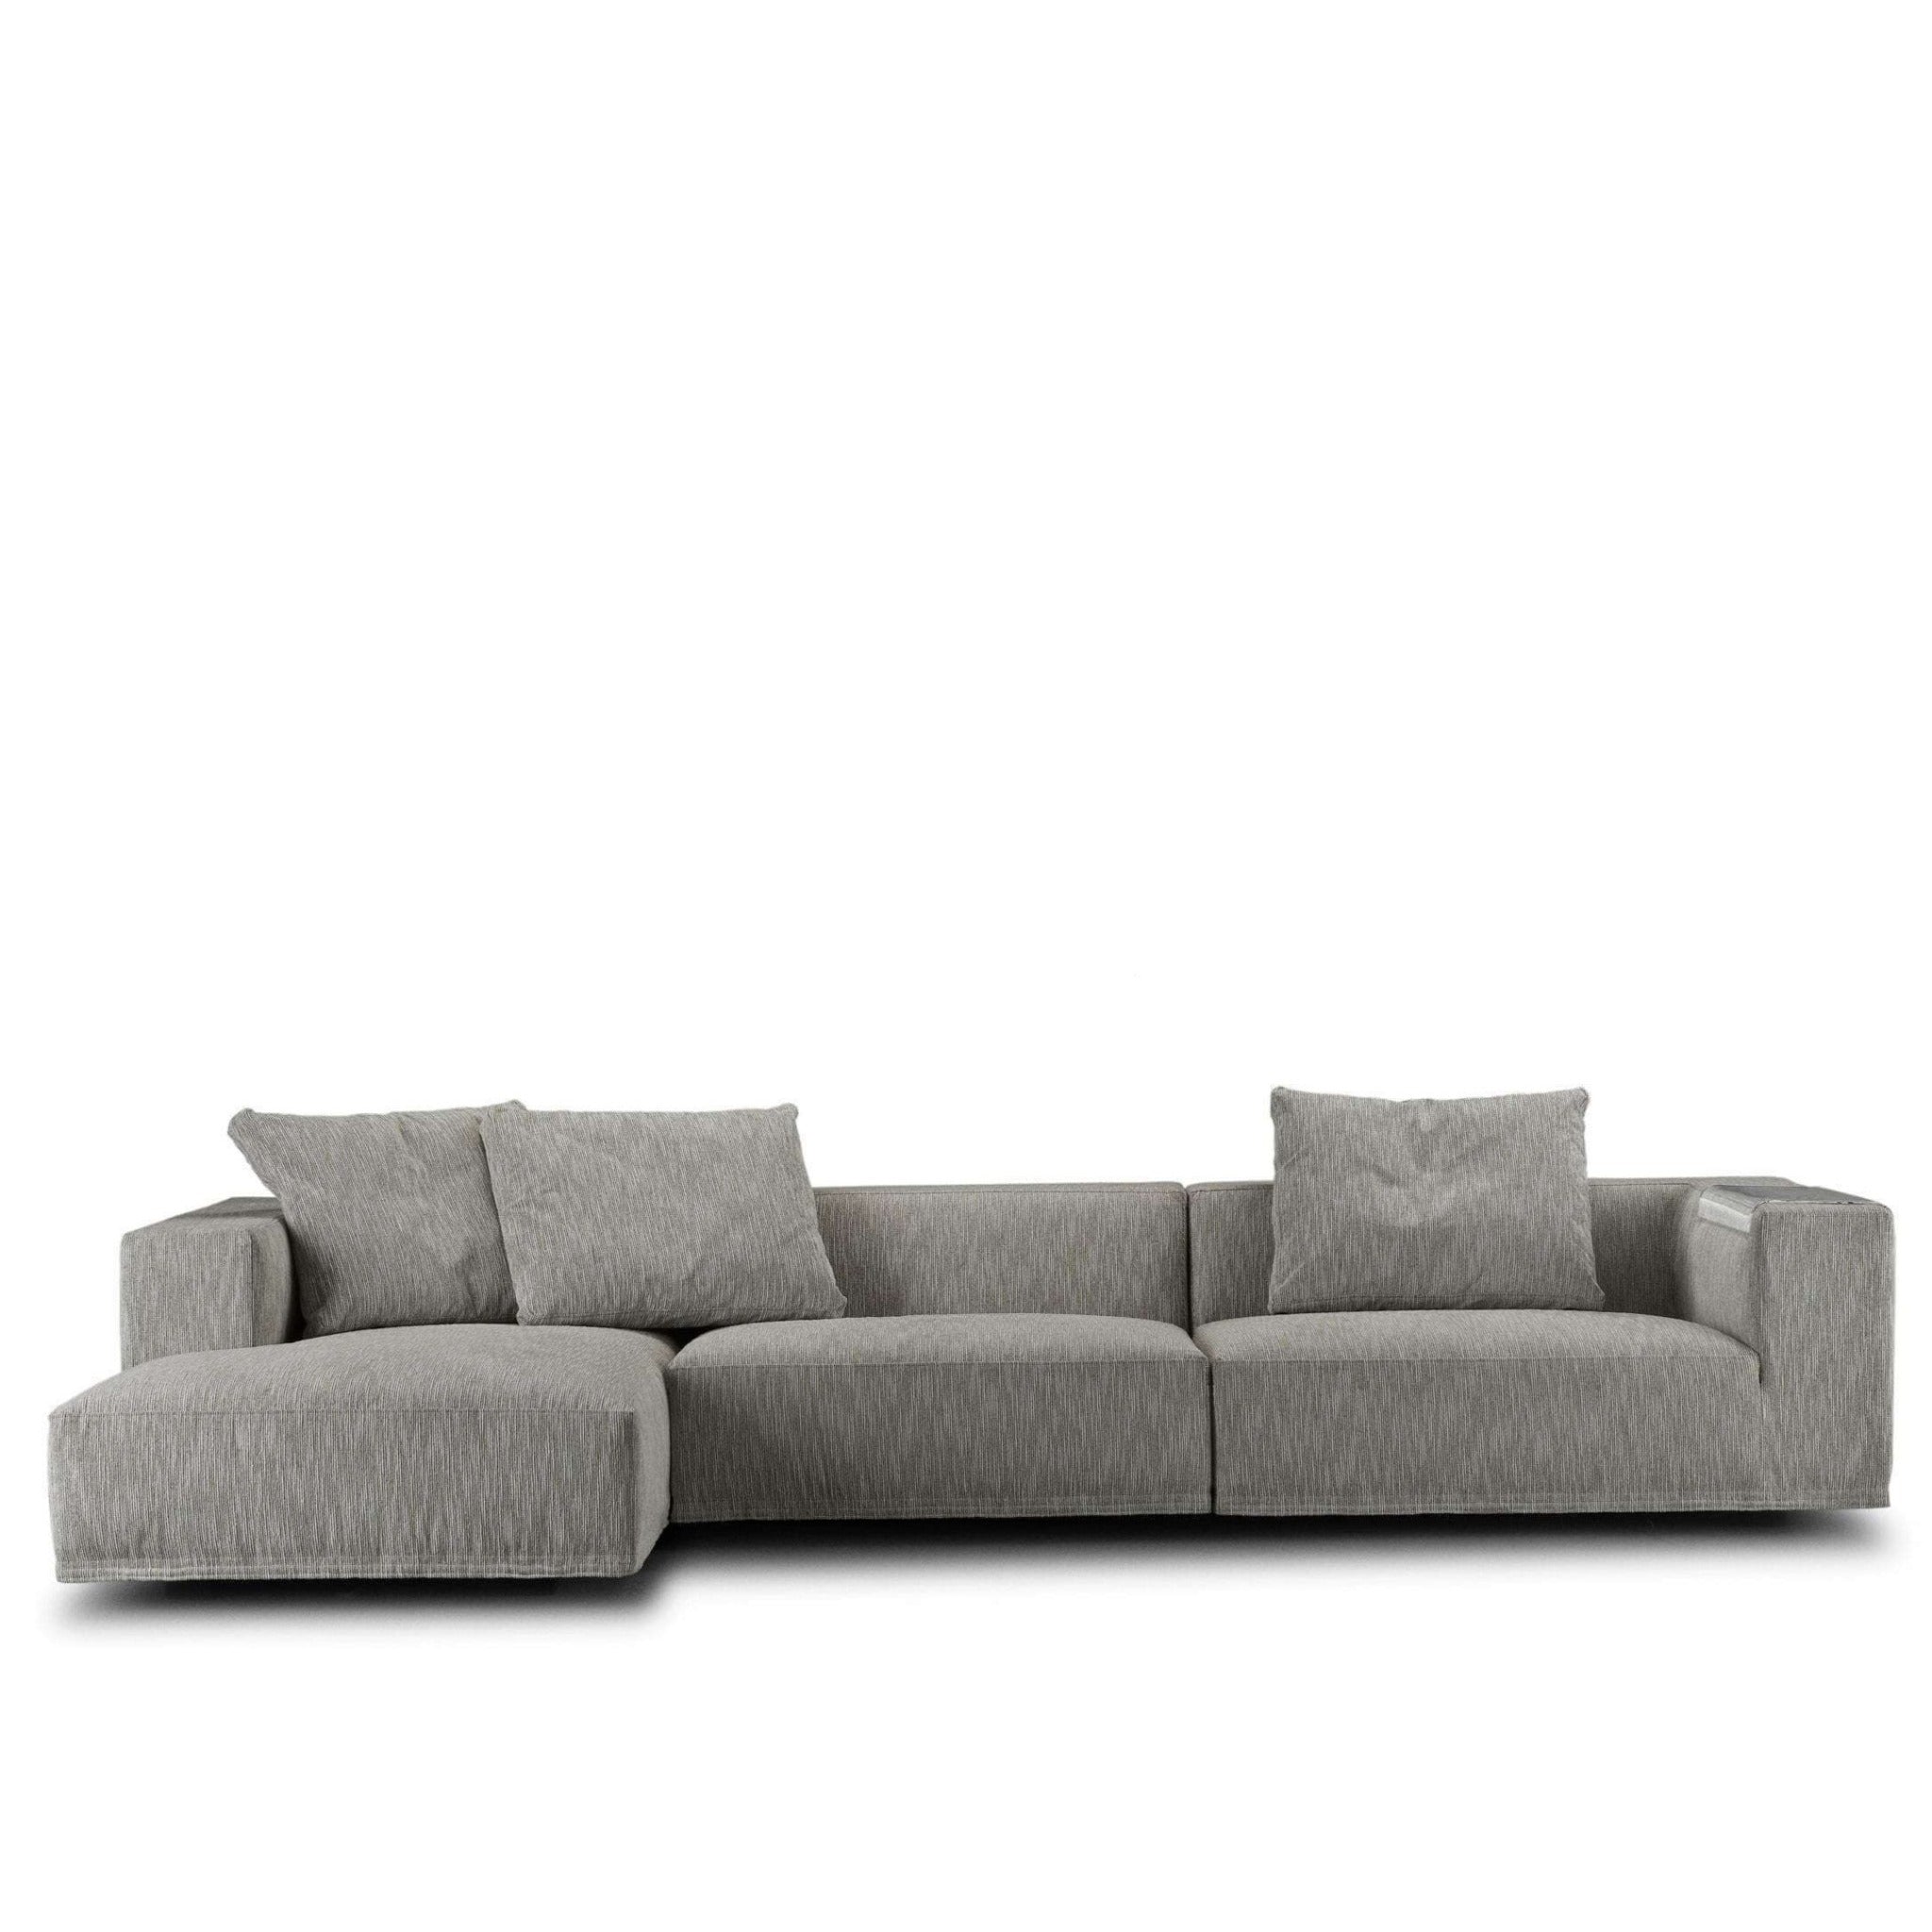 Eilersen Baseline Sectional Sofa New York |